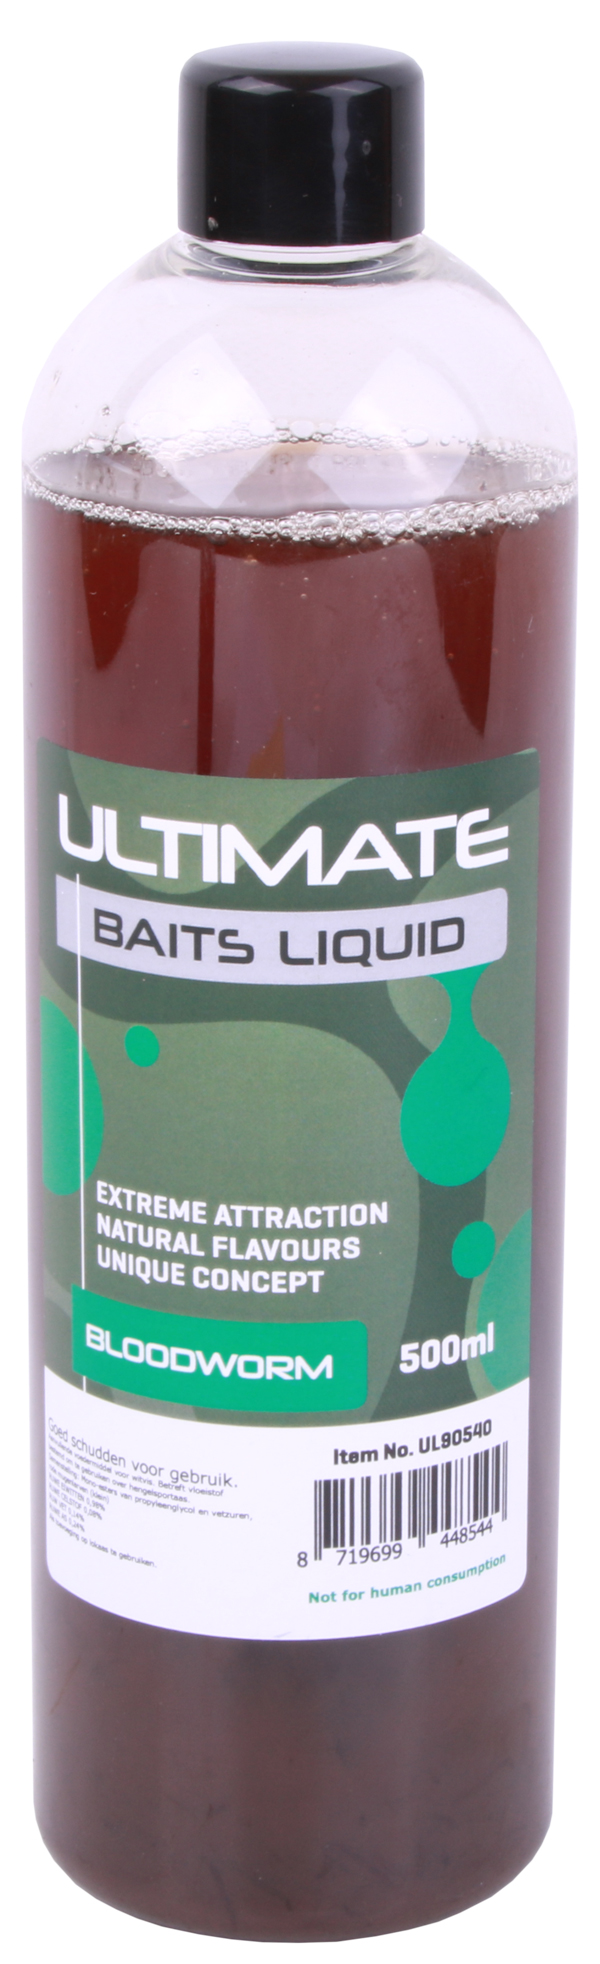 Ultimate Baits Liquid 500 ml - Bloodworm